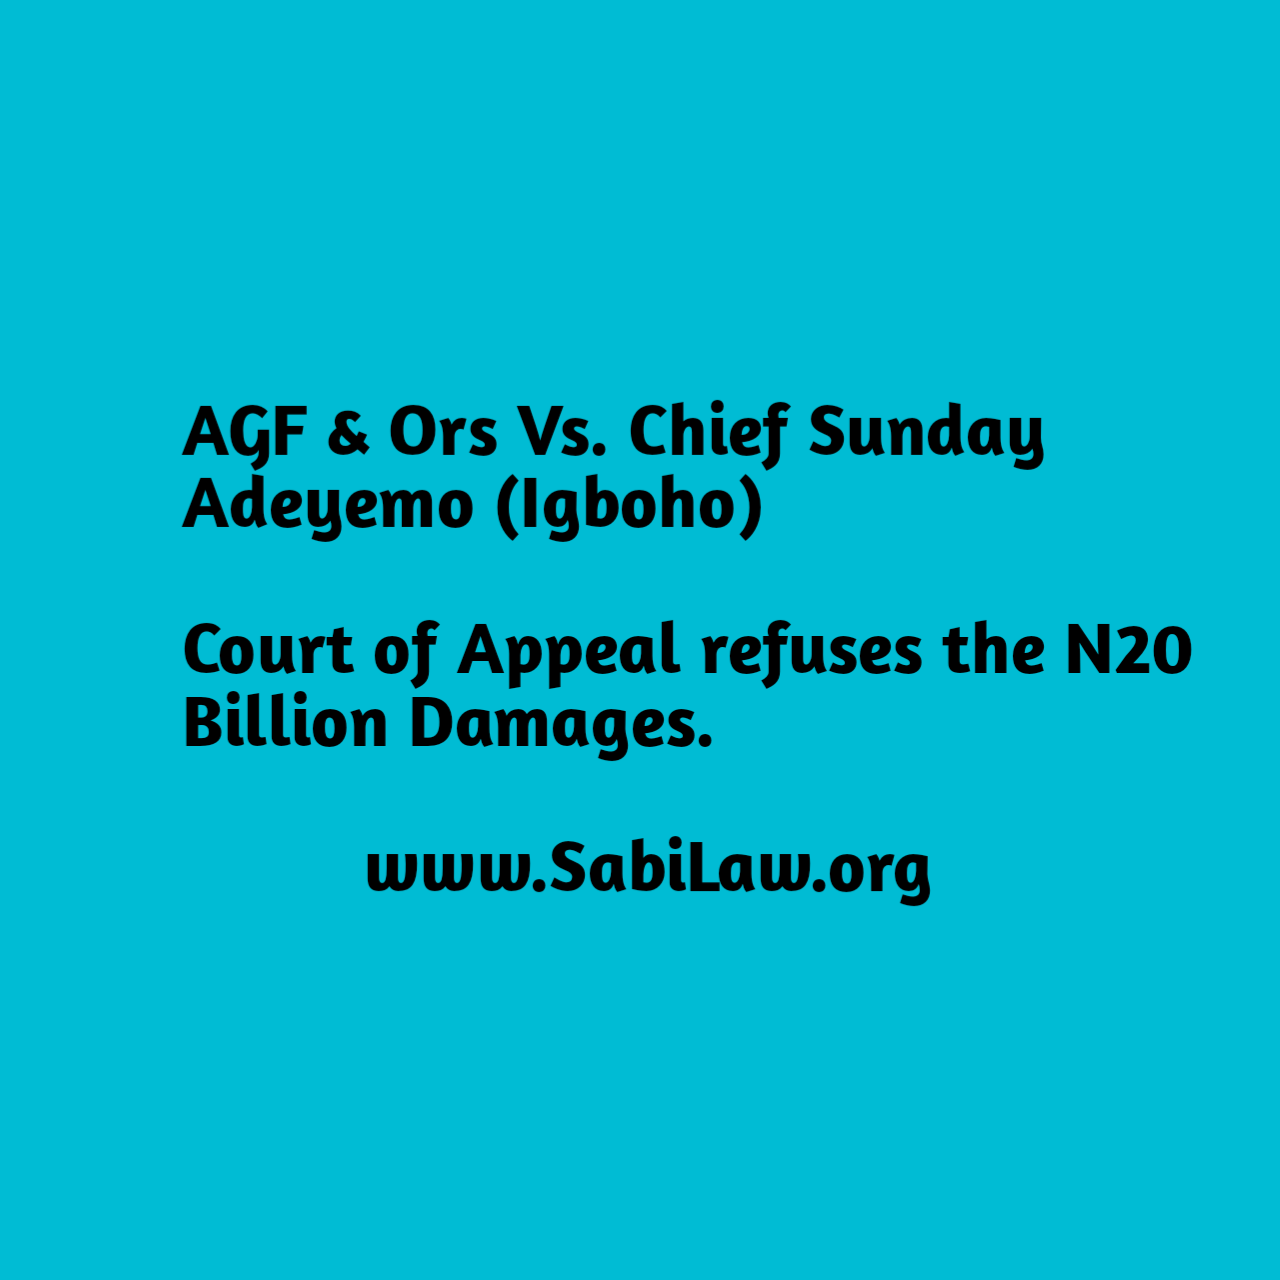 Copy of the AGF & Ors Vs. Chief Sunday Adeyemo (Igboho)